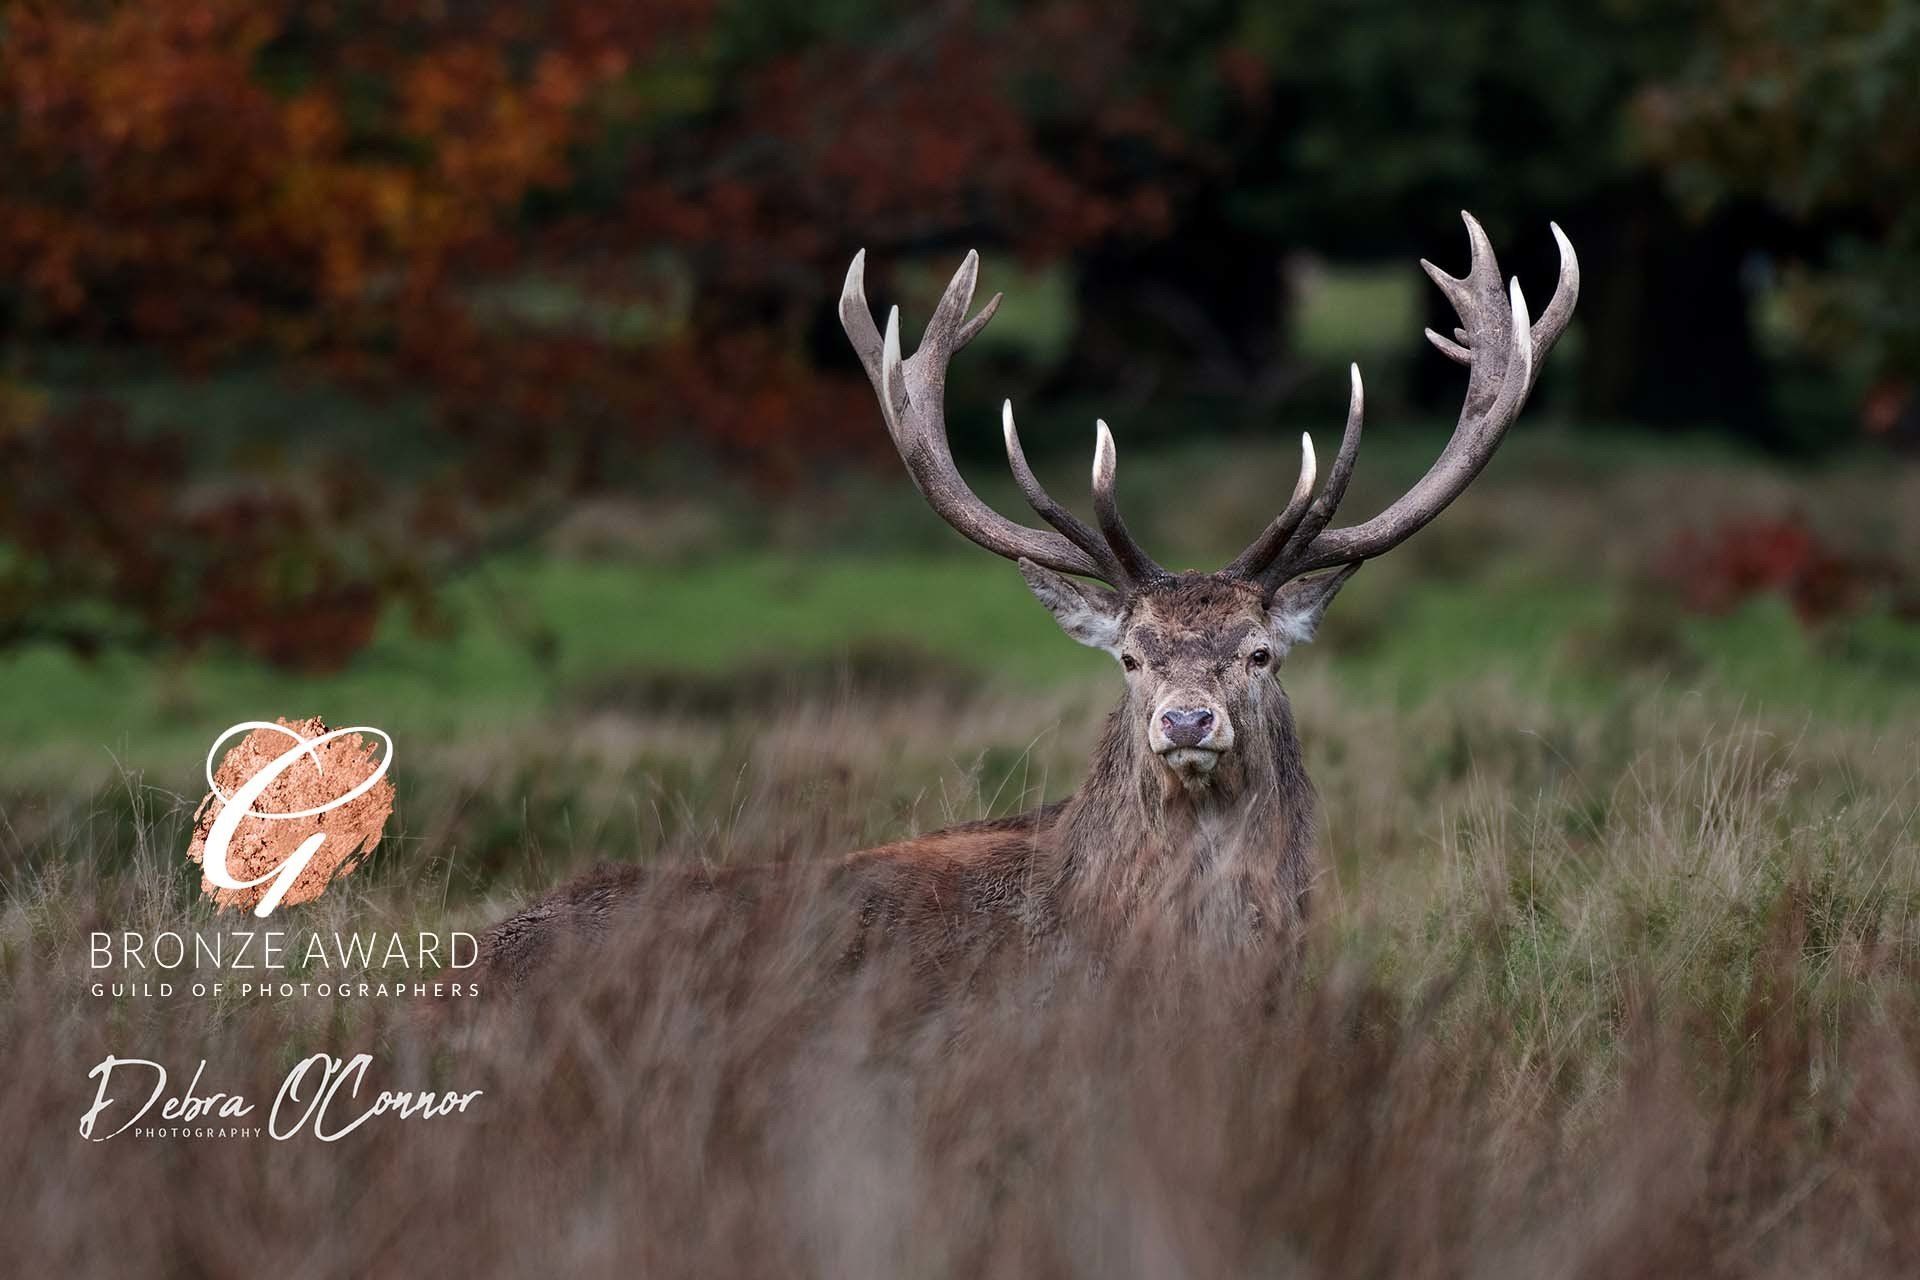 Award winning Lancashire wildlife photographer